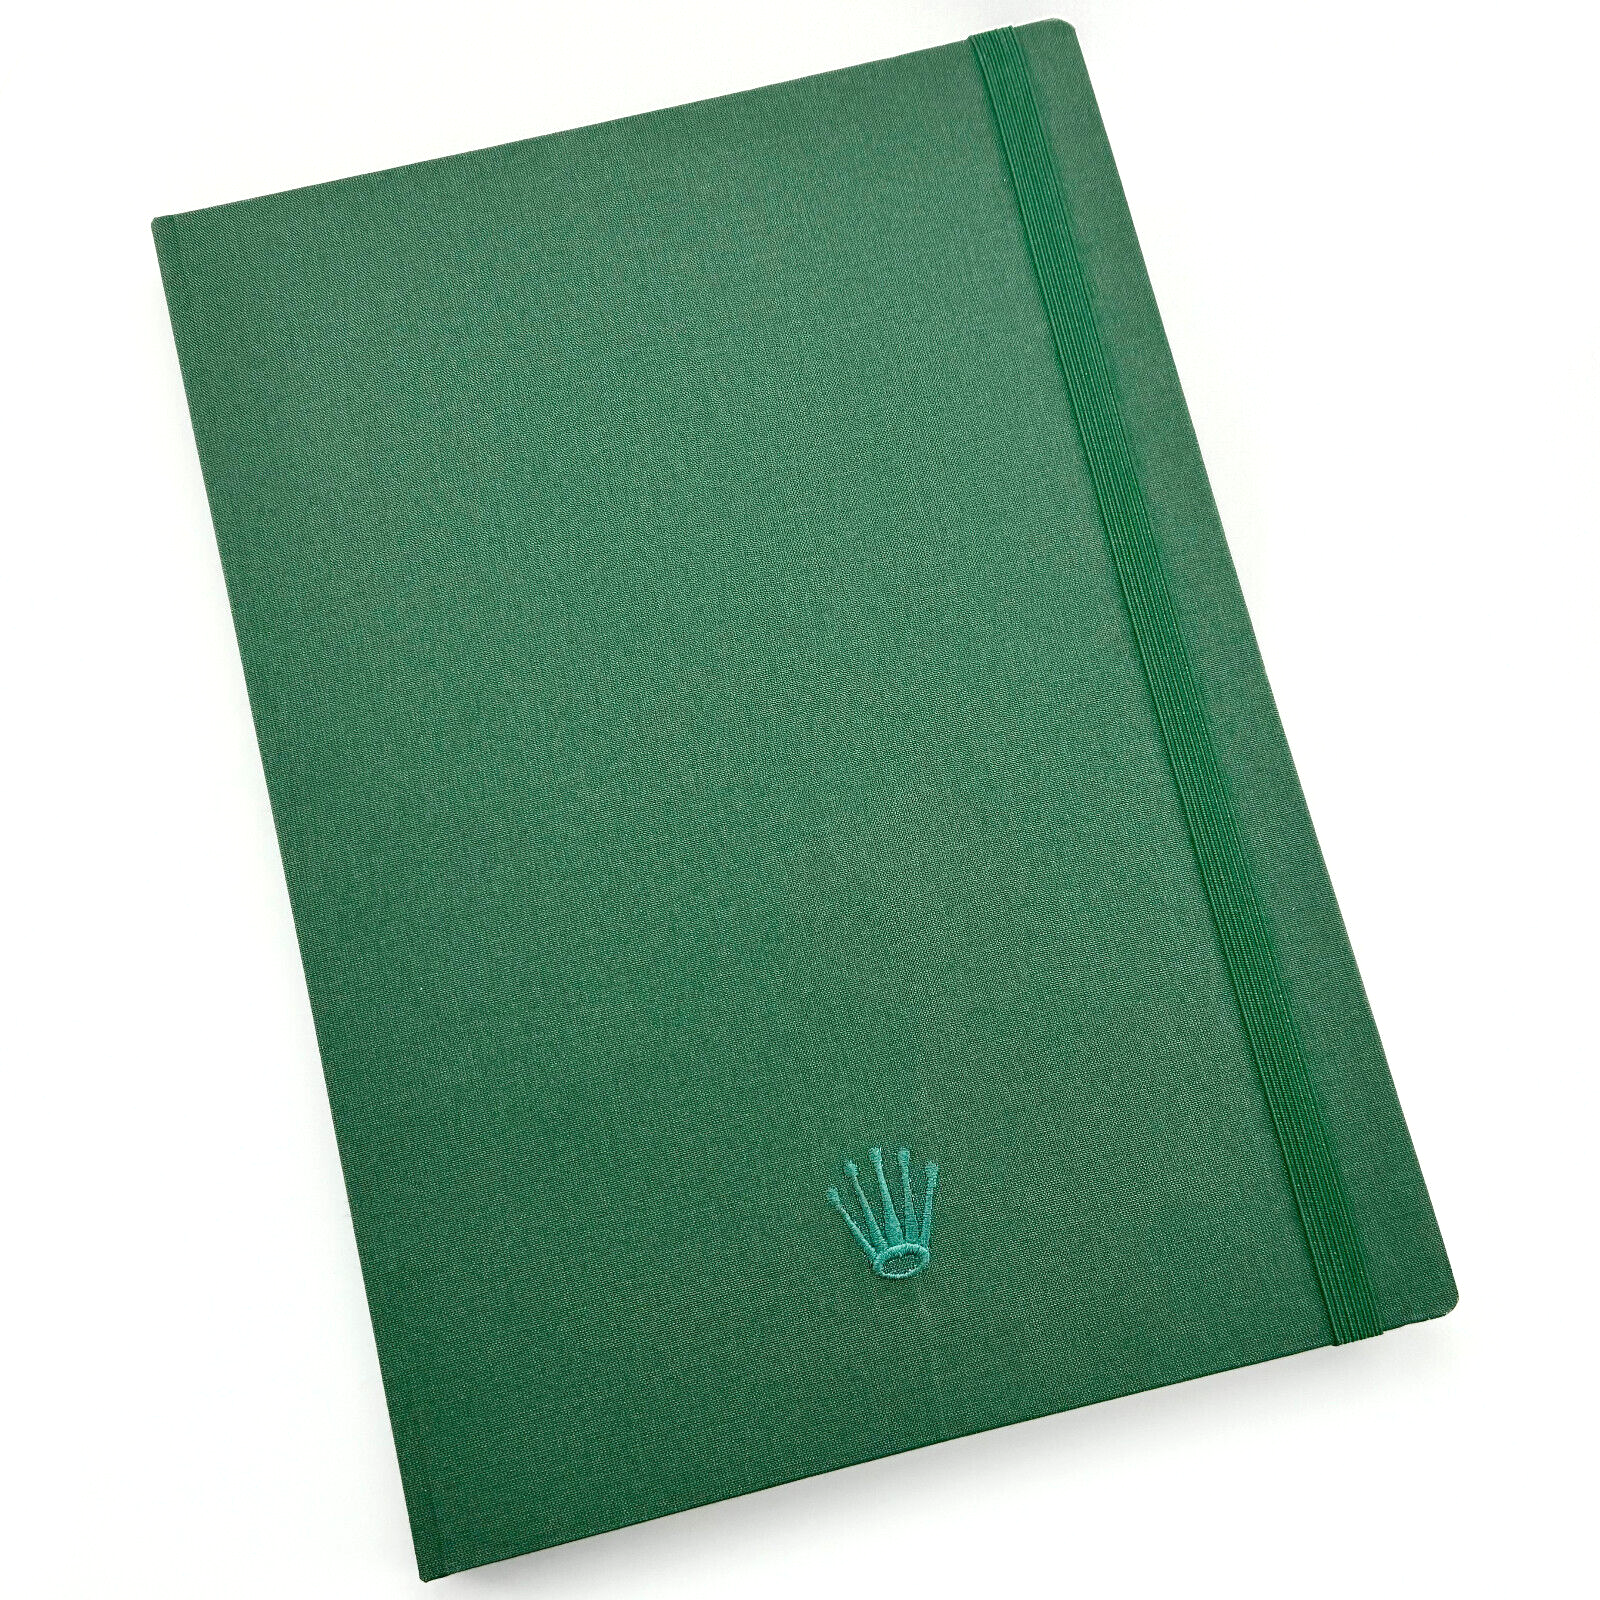 Rolex Notizbuch Planer Schreibwaren Schreibbuch notebook book Grün Green Book Buch